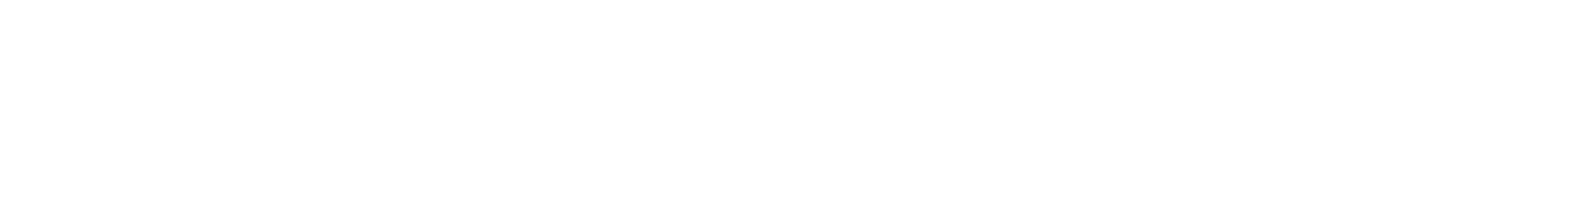 BBB BCA Customer Satisfaction Strip